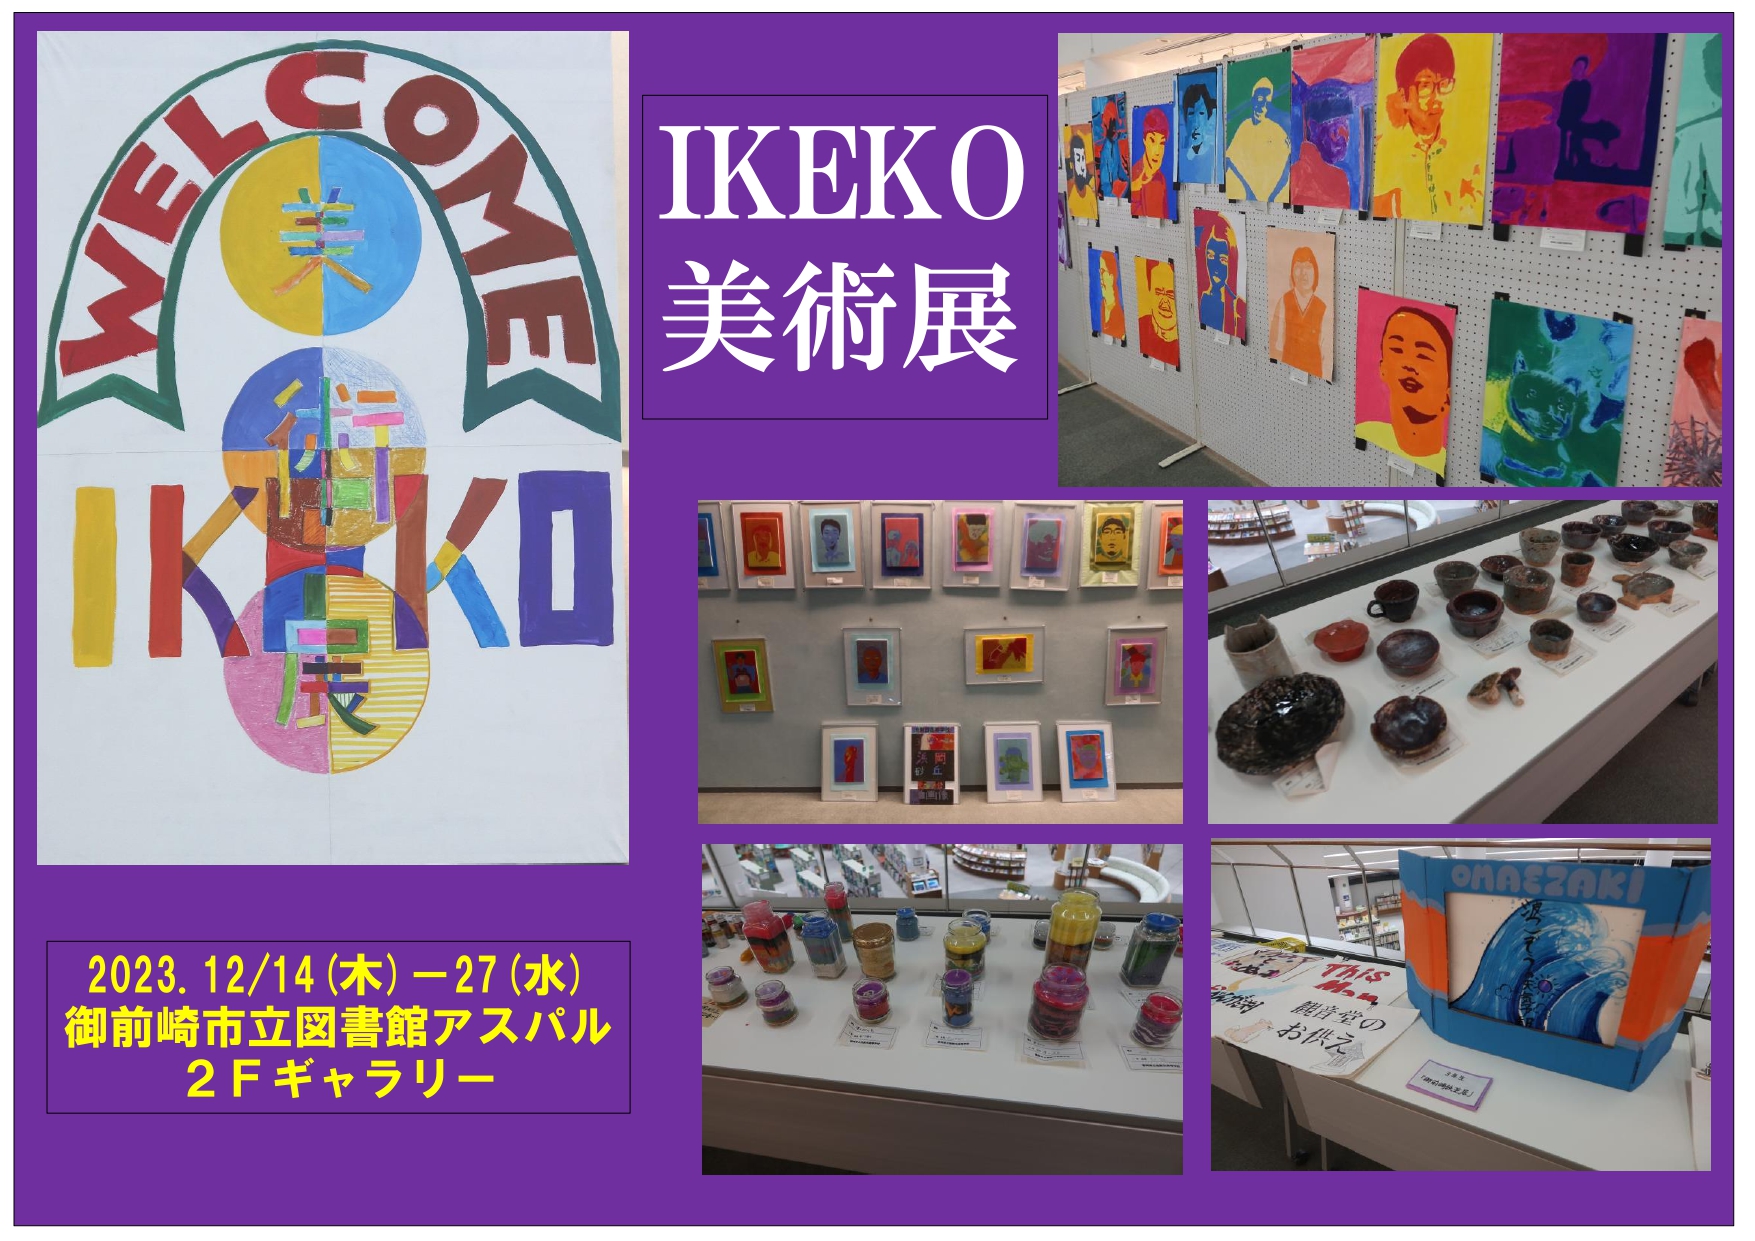 IKEKO美術展 初めて開催!